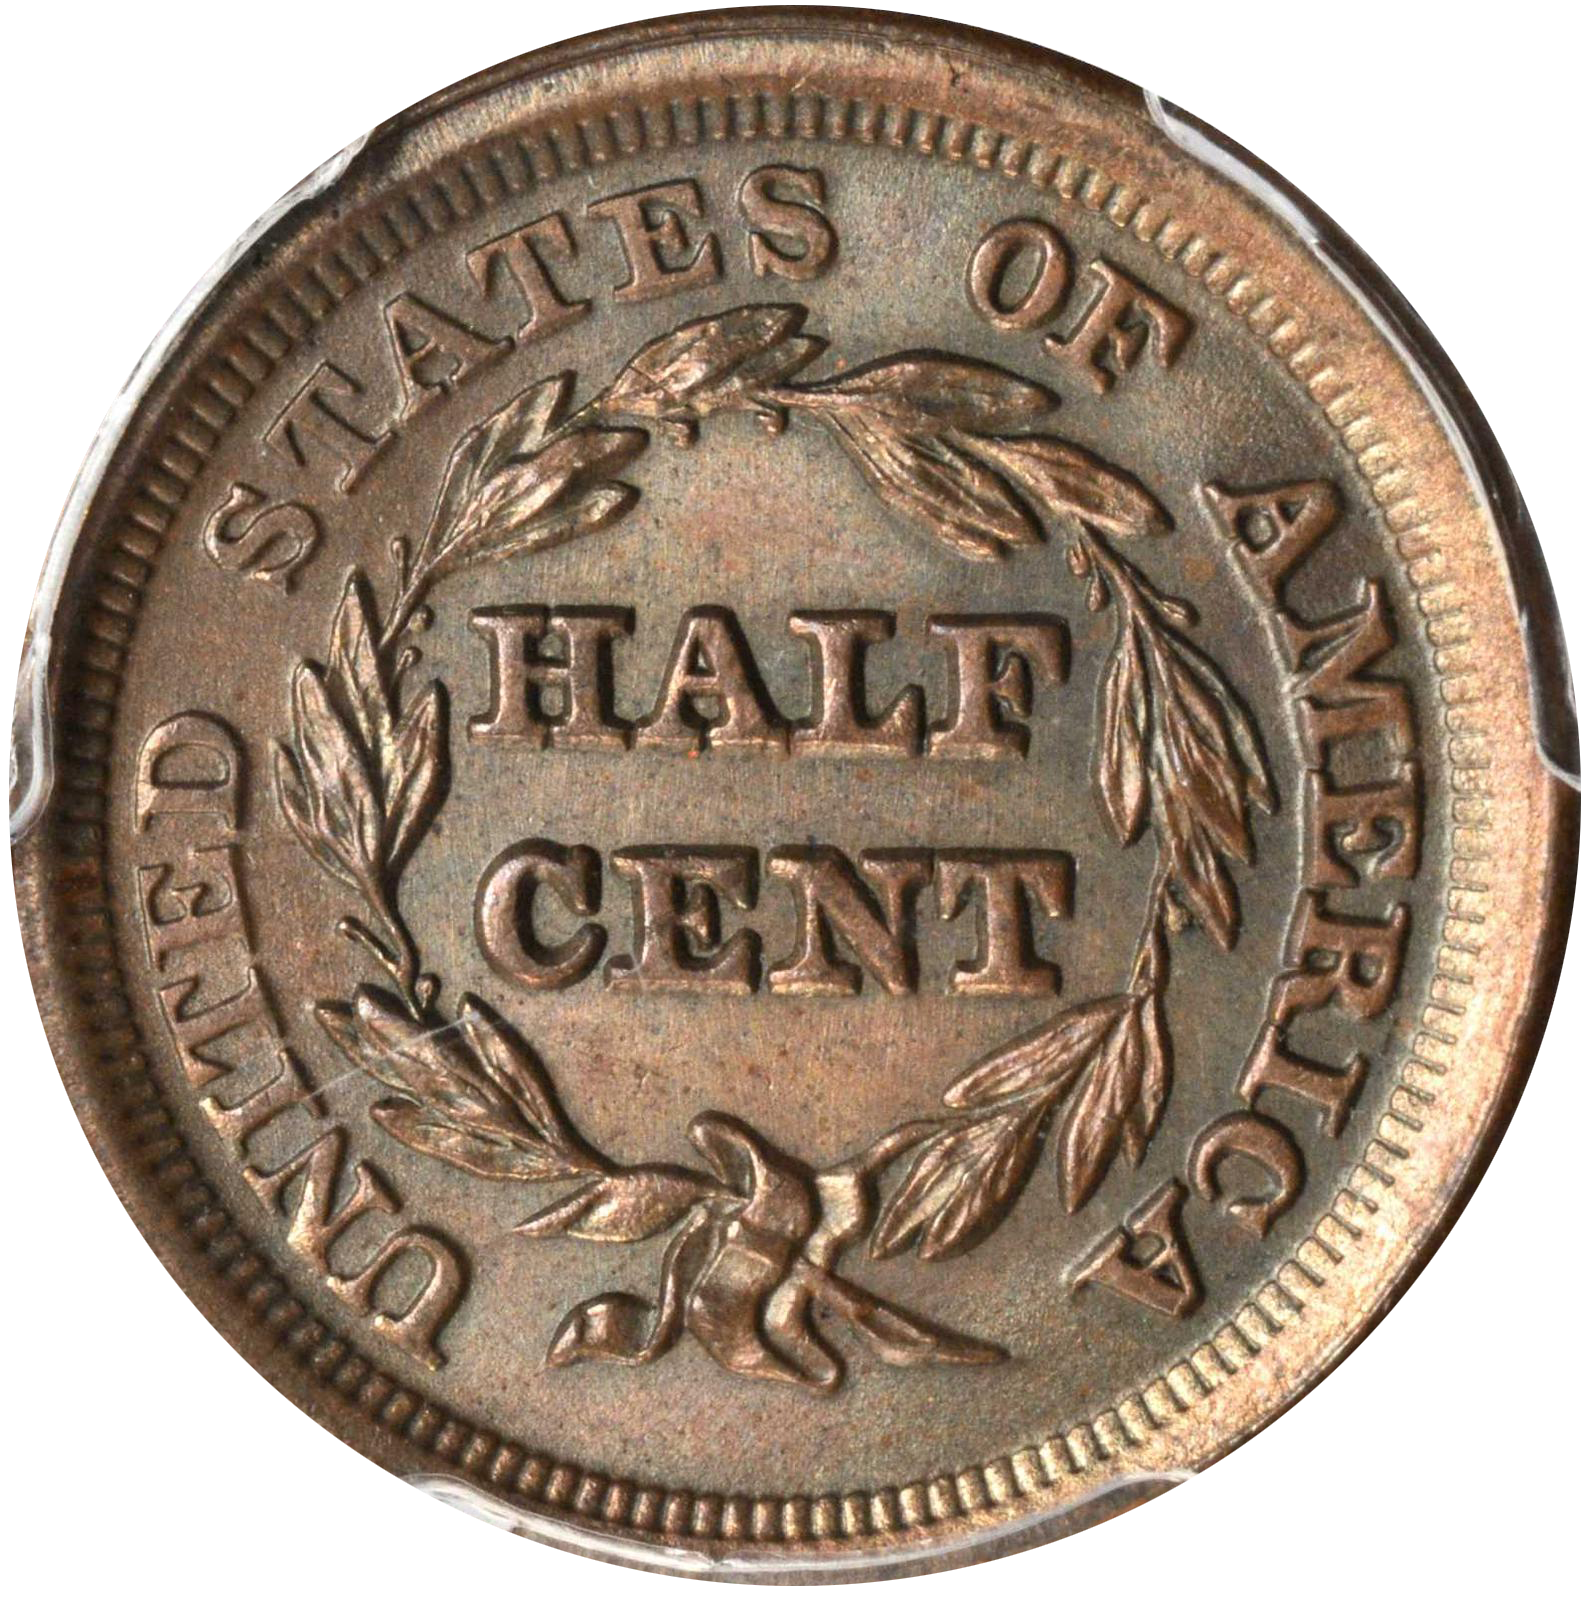 Value of 1857 Braided Hair Half Cent